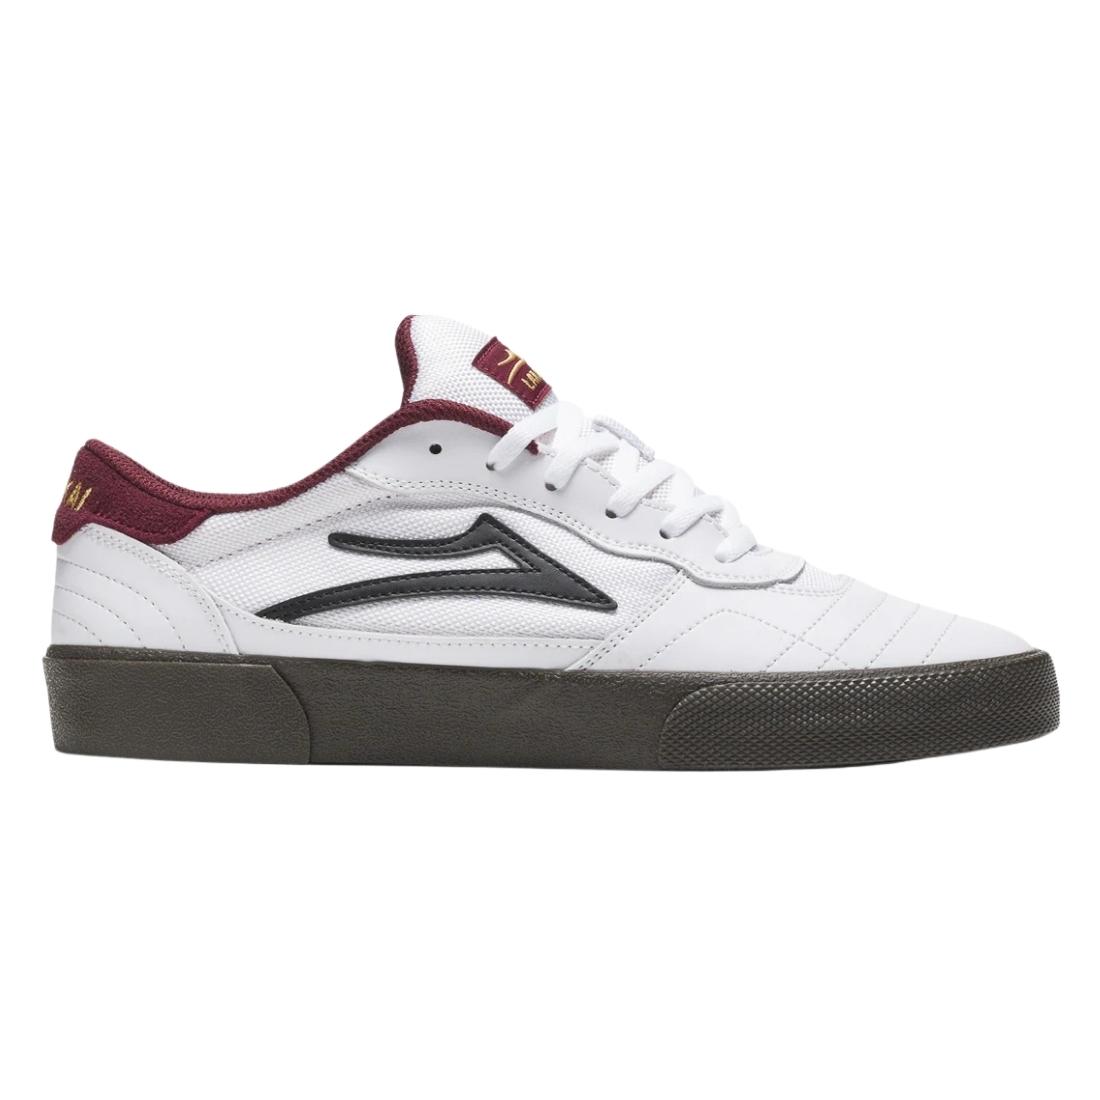 Lakai Cambridge Skate Shoes - White/Gum Leather - Mens Skate Shoes by Lakai